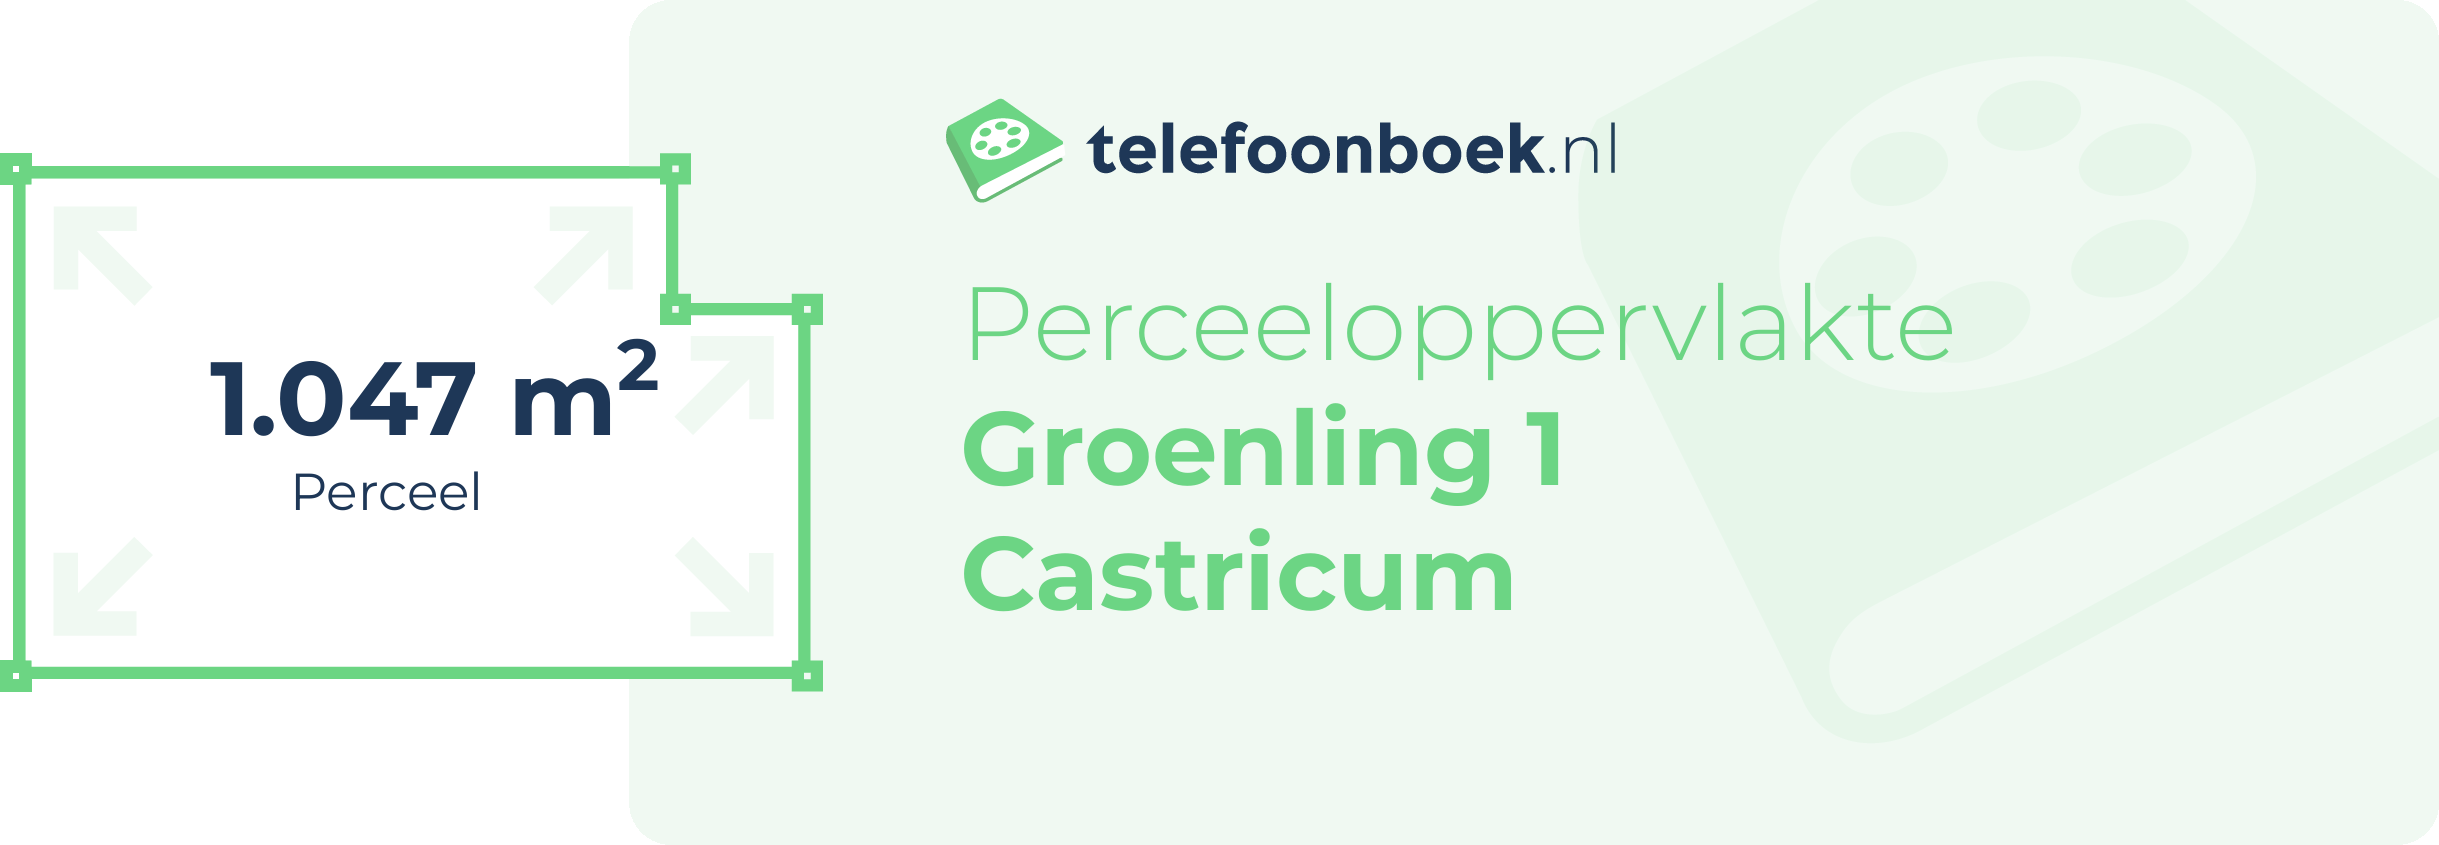 Perceeloppervlakte Groenling 1 Castricum